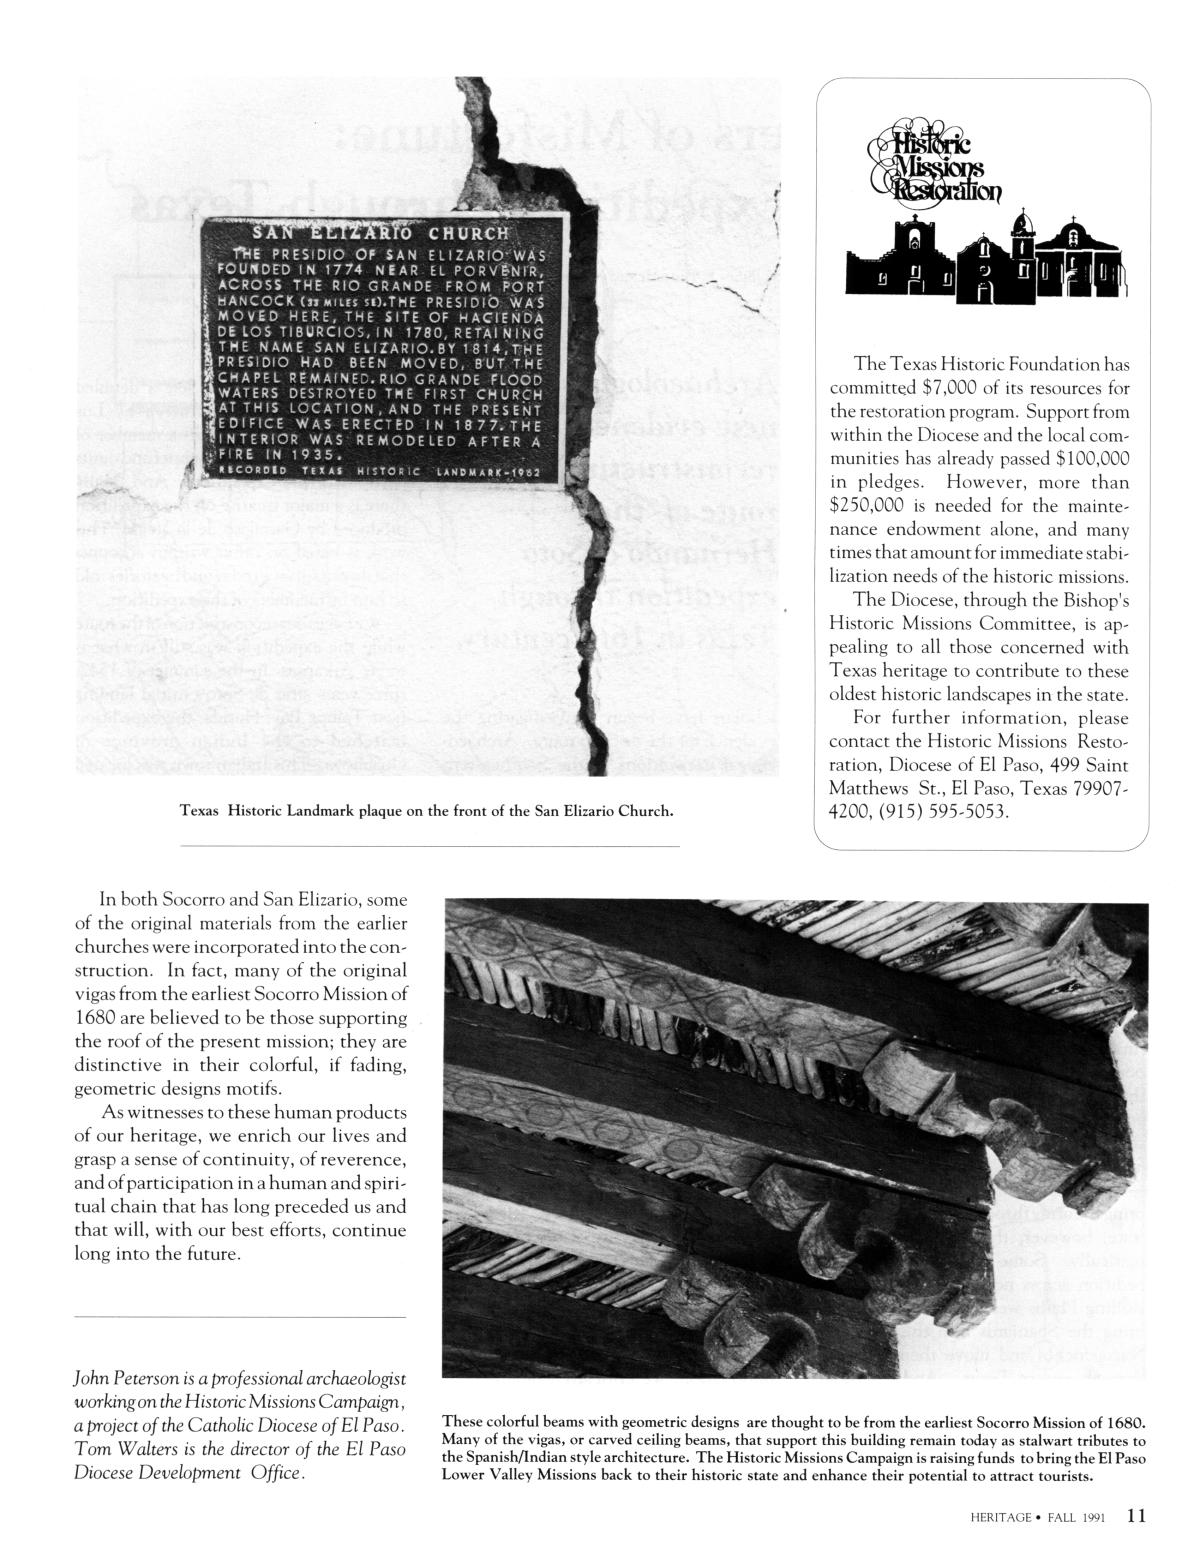 Heritage, Volume 9, Number 4, Fall 1991
                                                
                                                    11
                                                